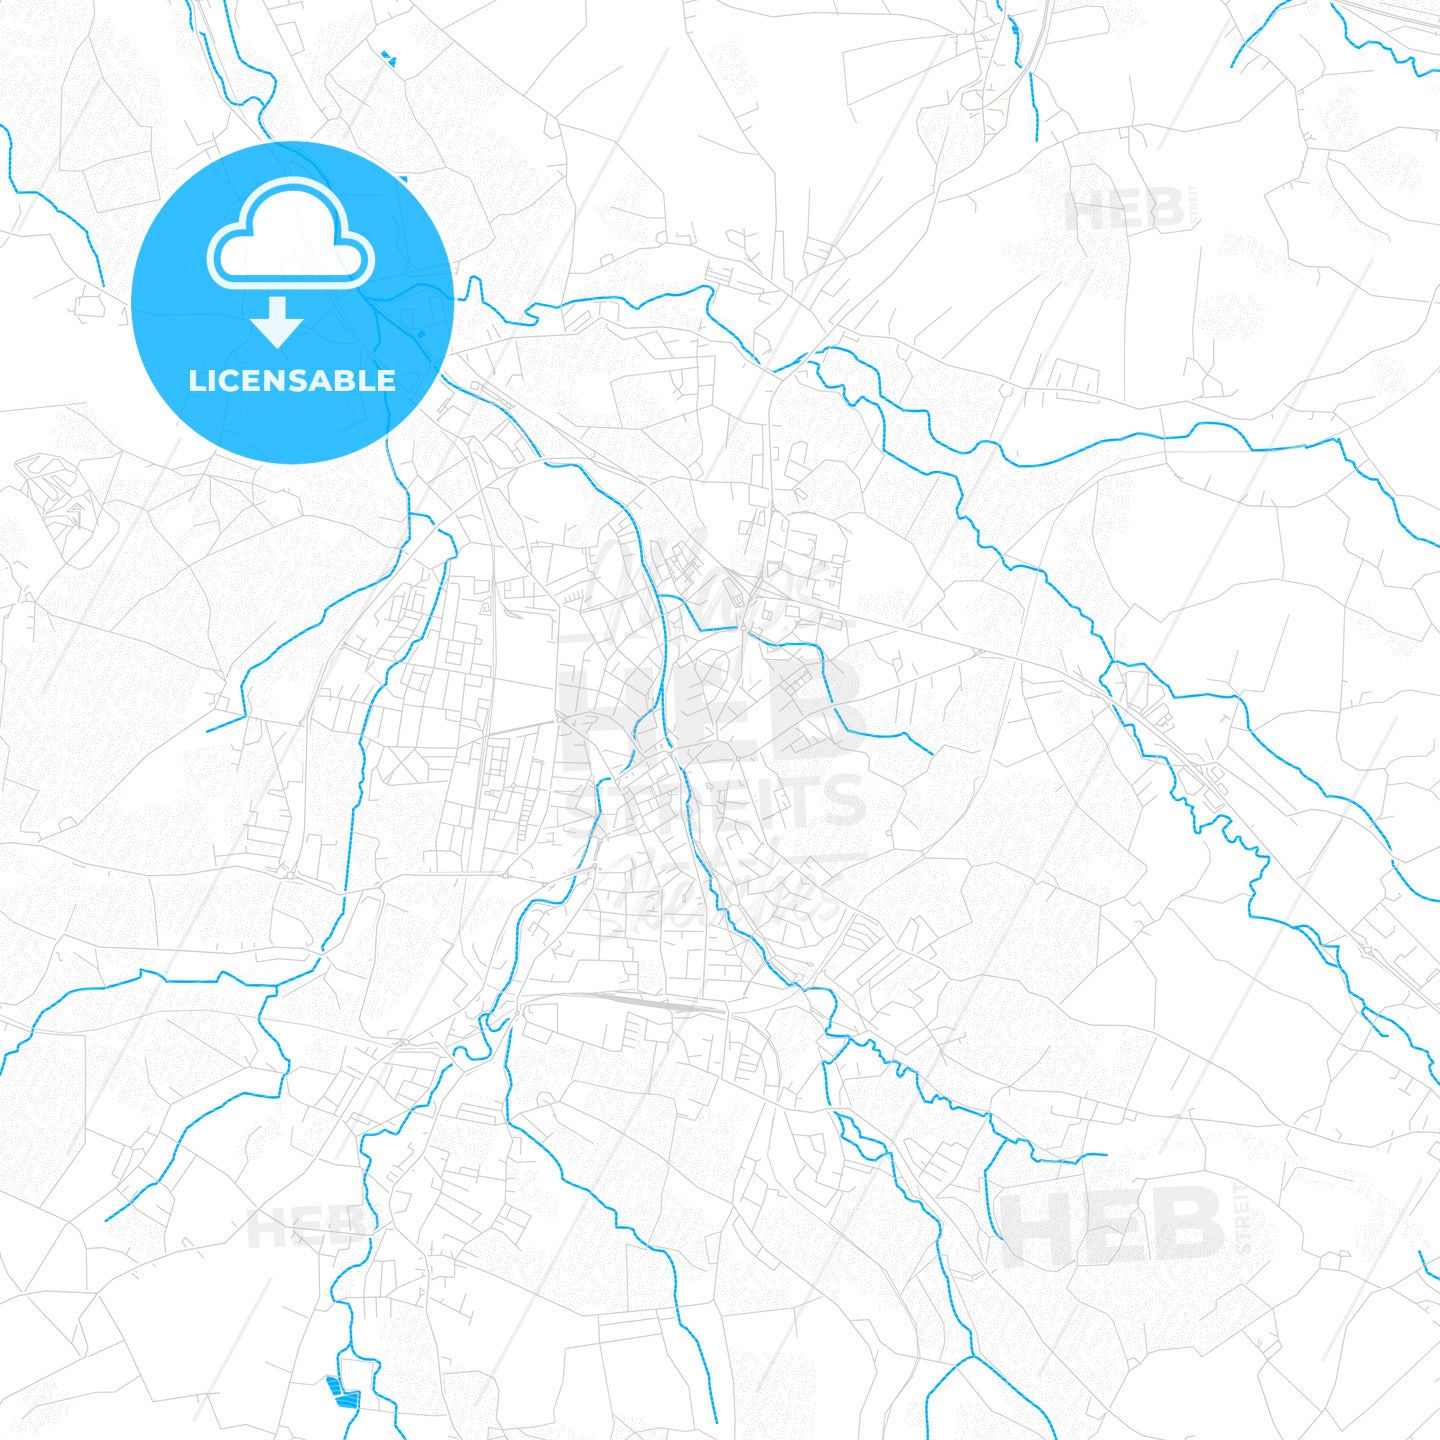 Ried im Innkreis, Austria PDF vector map with water in focus